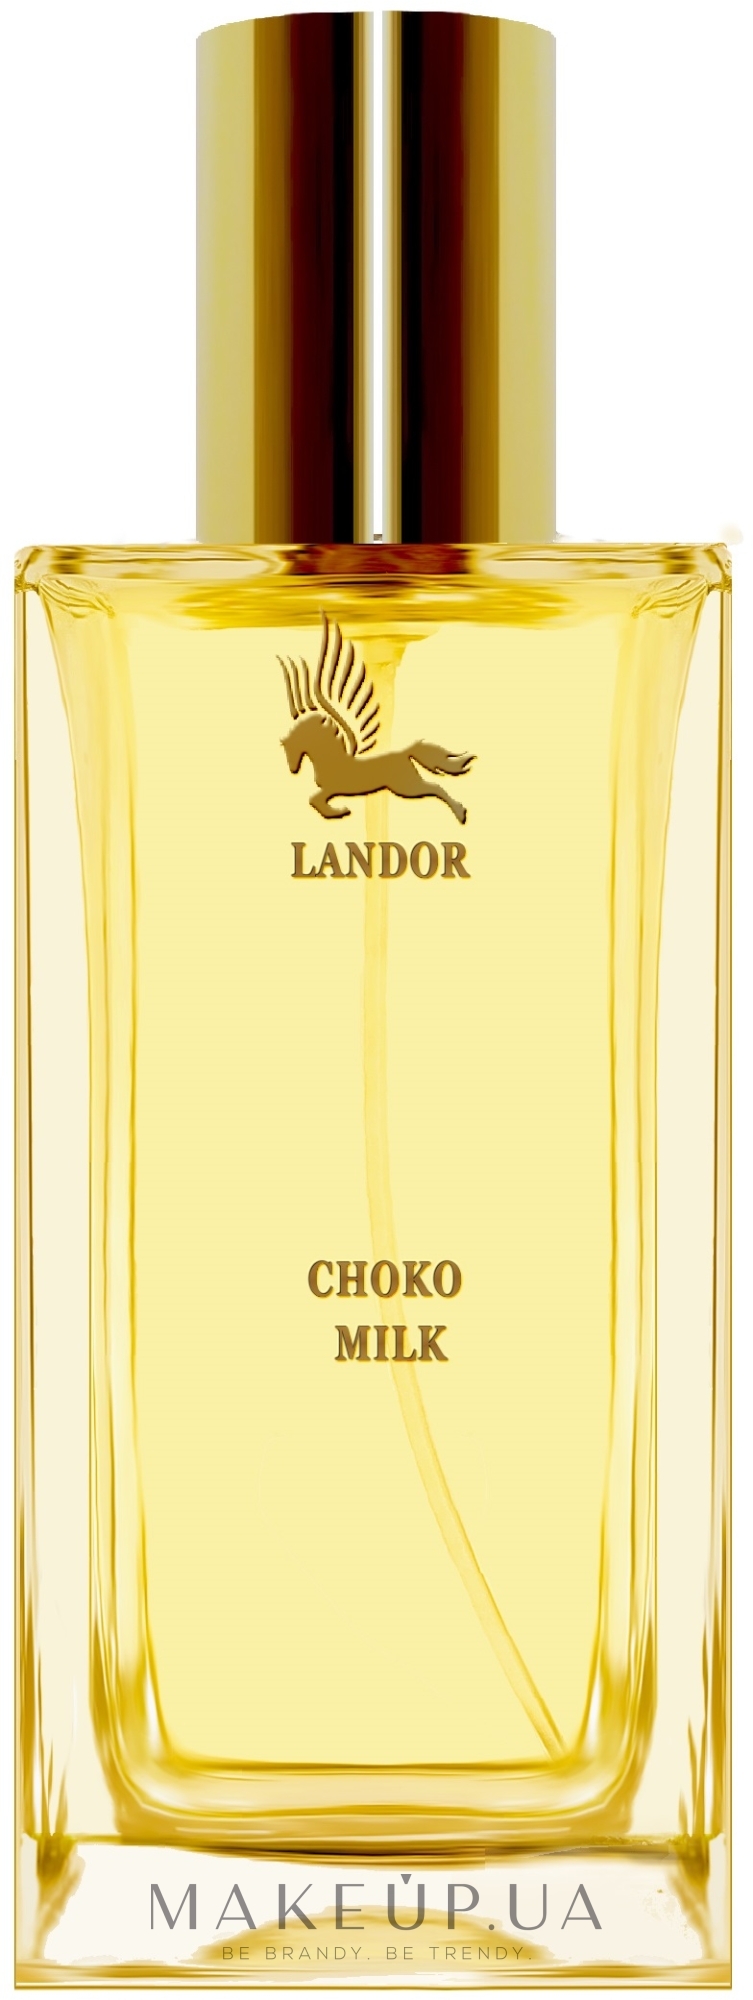 Landor Choko Milk